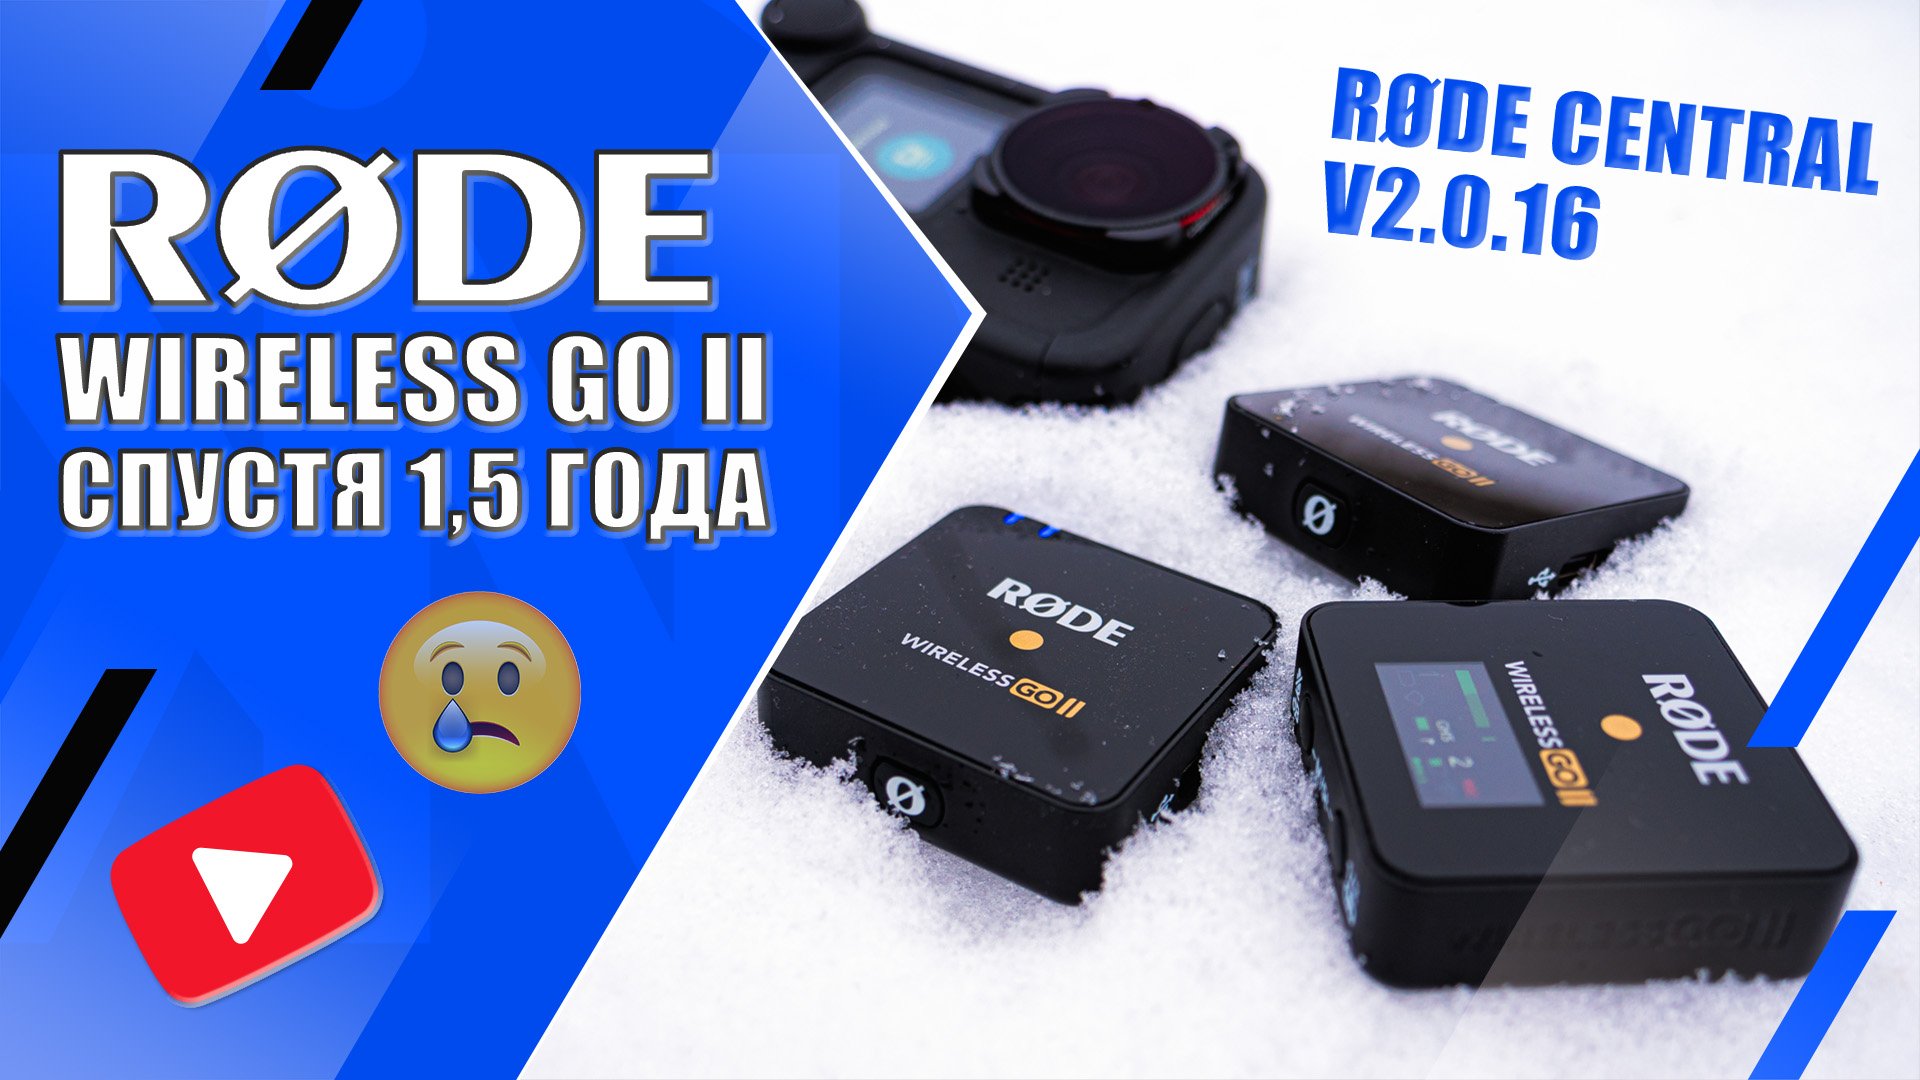 RØDE Wireless Go II спустя 1,5 года ? | Обновление RØDE Central v2.0.16 (пресеты для камер)